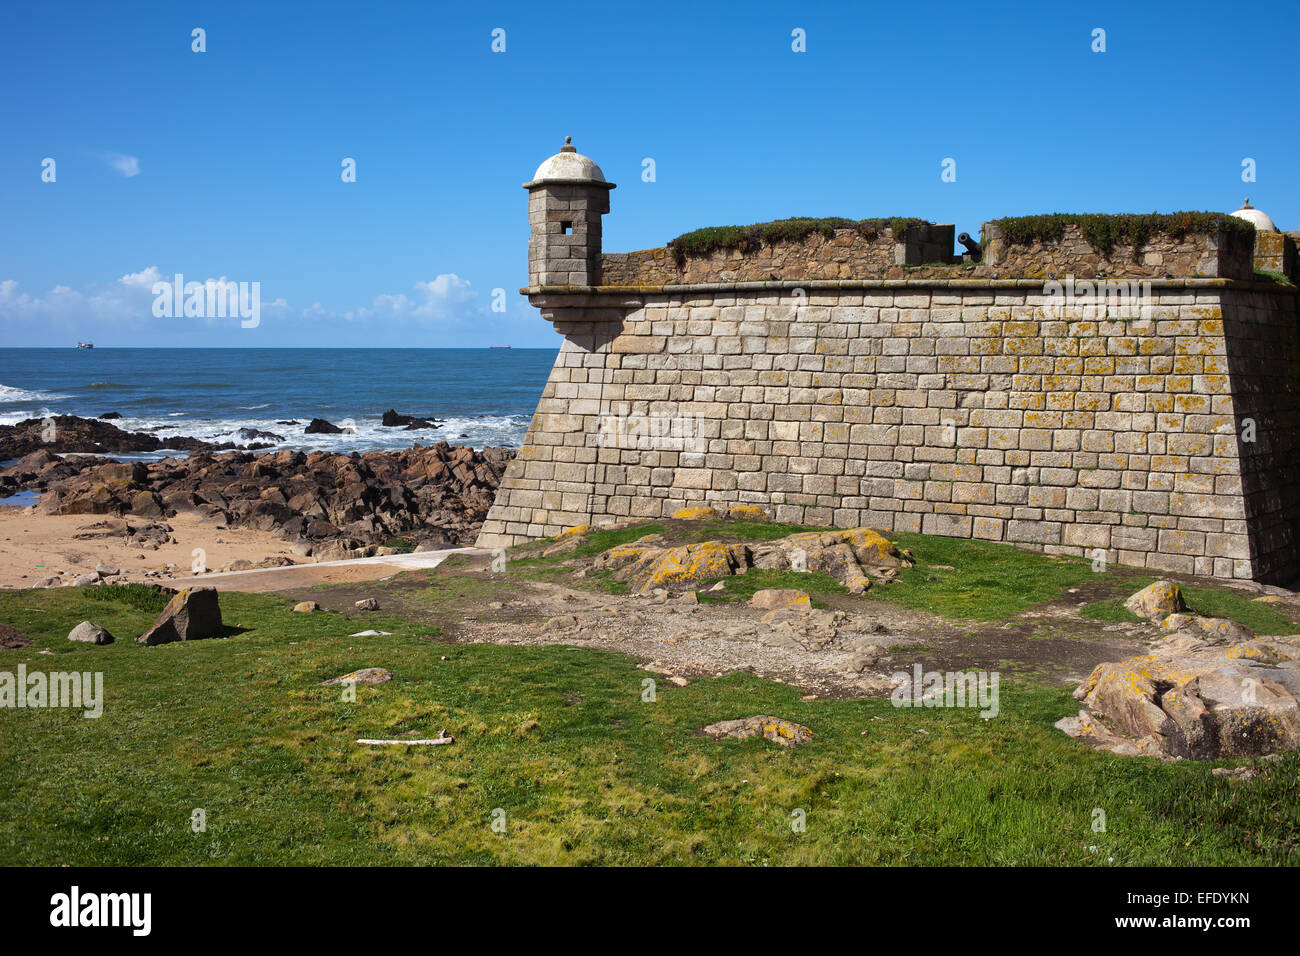 Queijo Castle (Forte de Sao Francisco Xavier) by the Atlantic Ocean in Porto, Portugal. Stock Photo